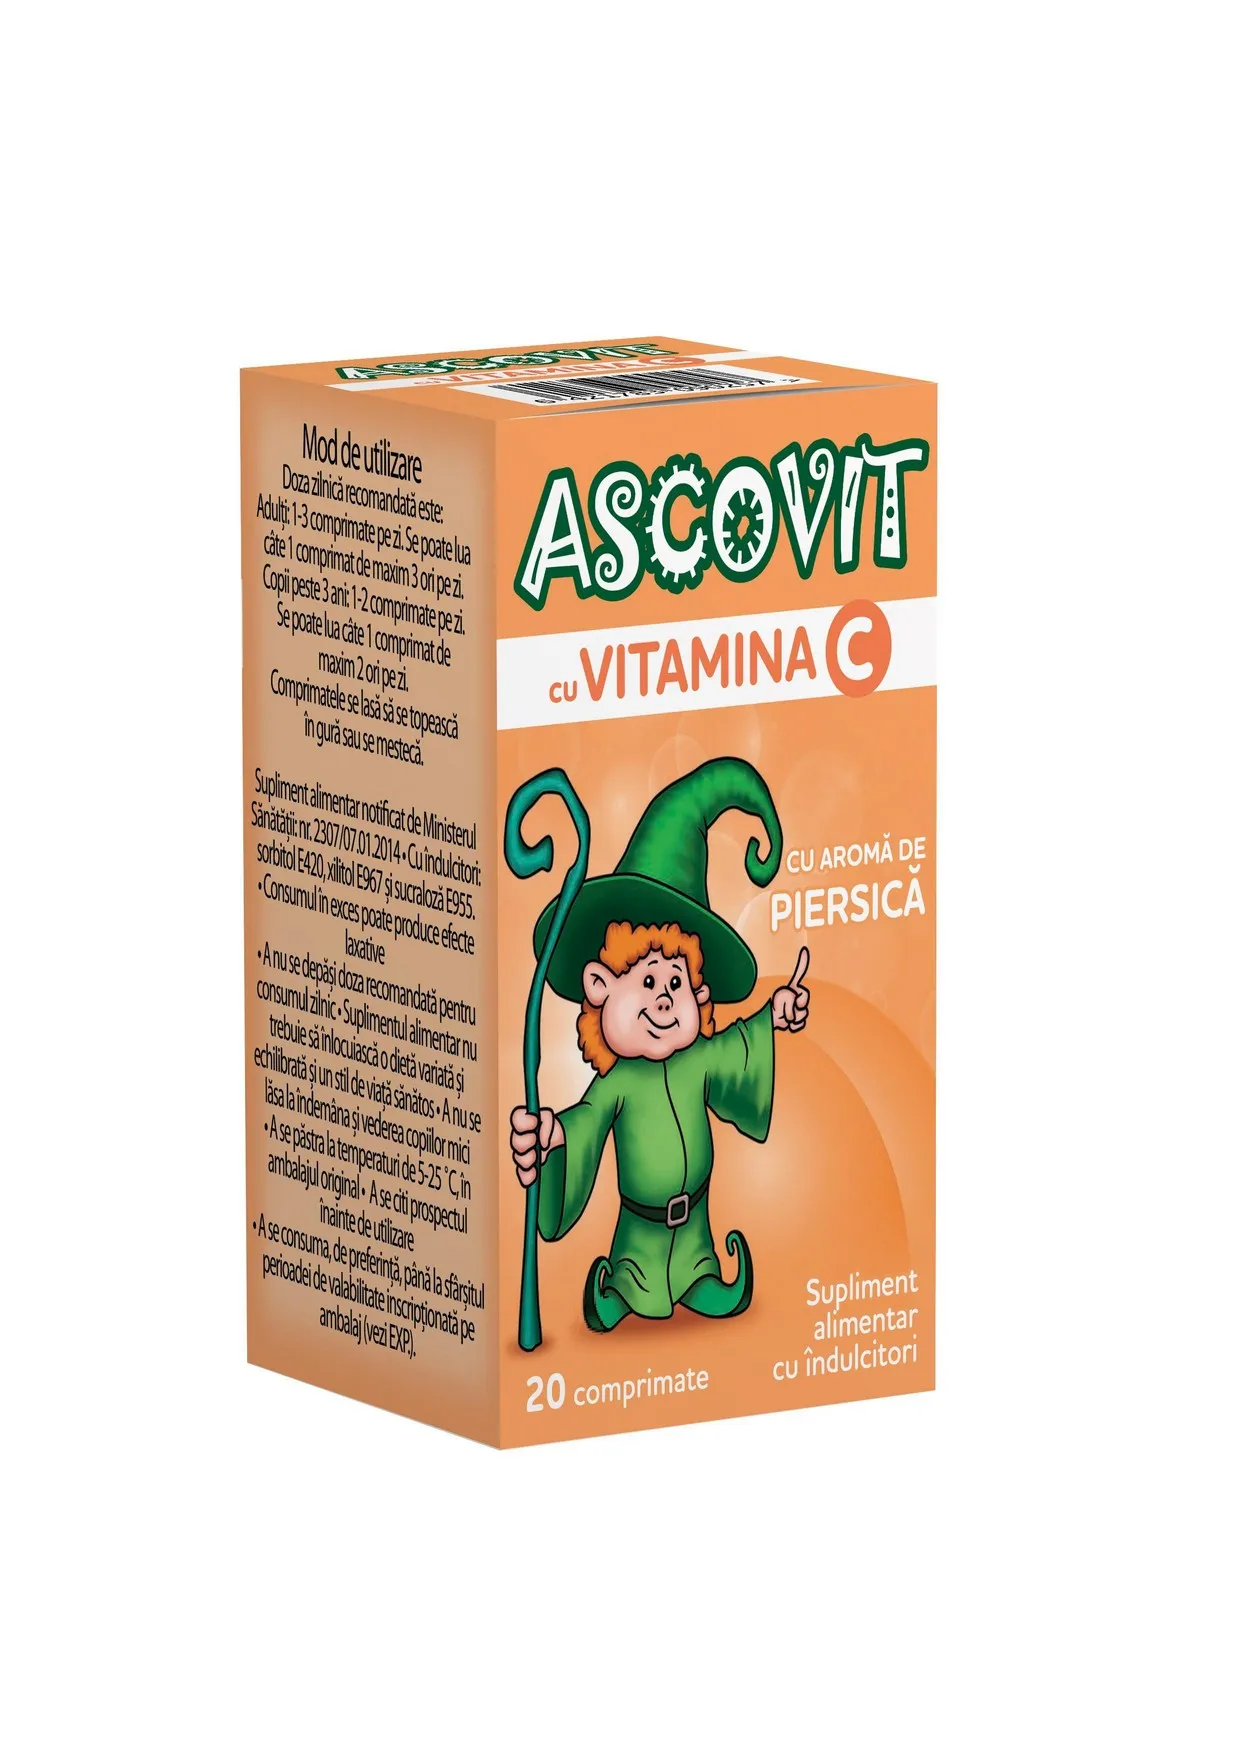 Ascovit 100 mg x 20 comprimate piersica (Omega Pharma)